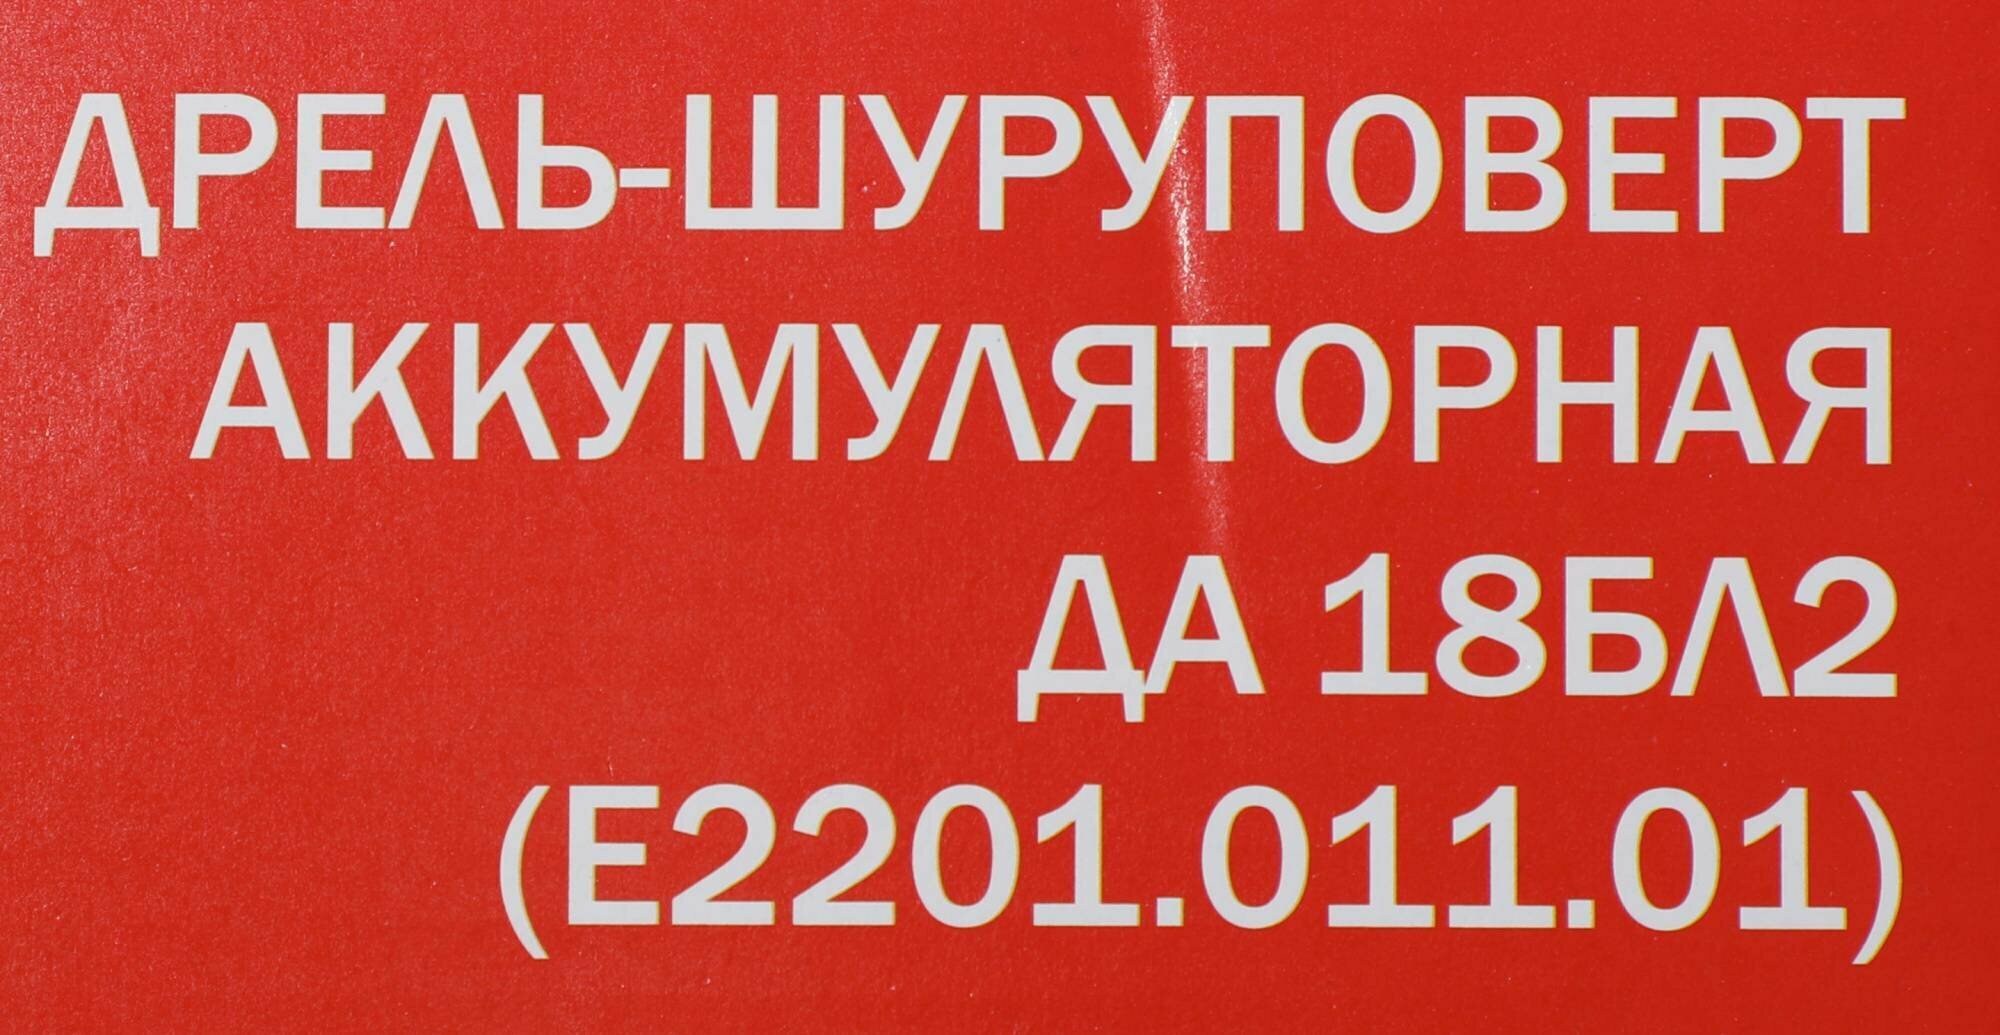 Аккумуляторная дрель-шуруповерт Elitech ДА 18БЛ2 (E2201.011.01) - фото №20